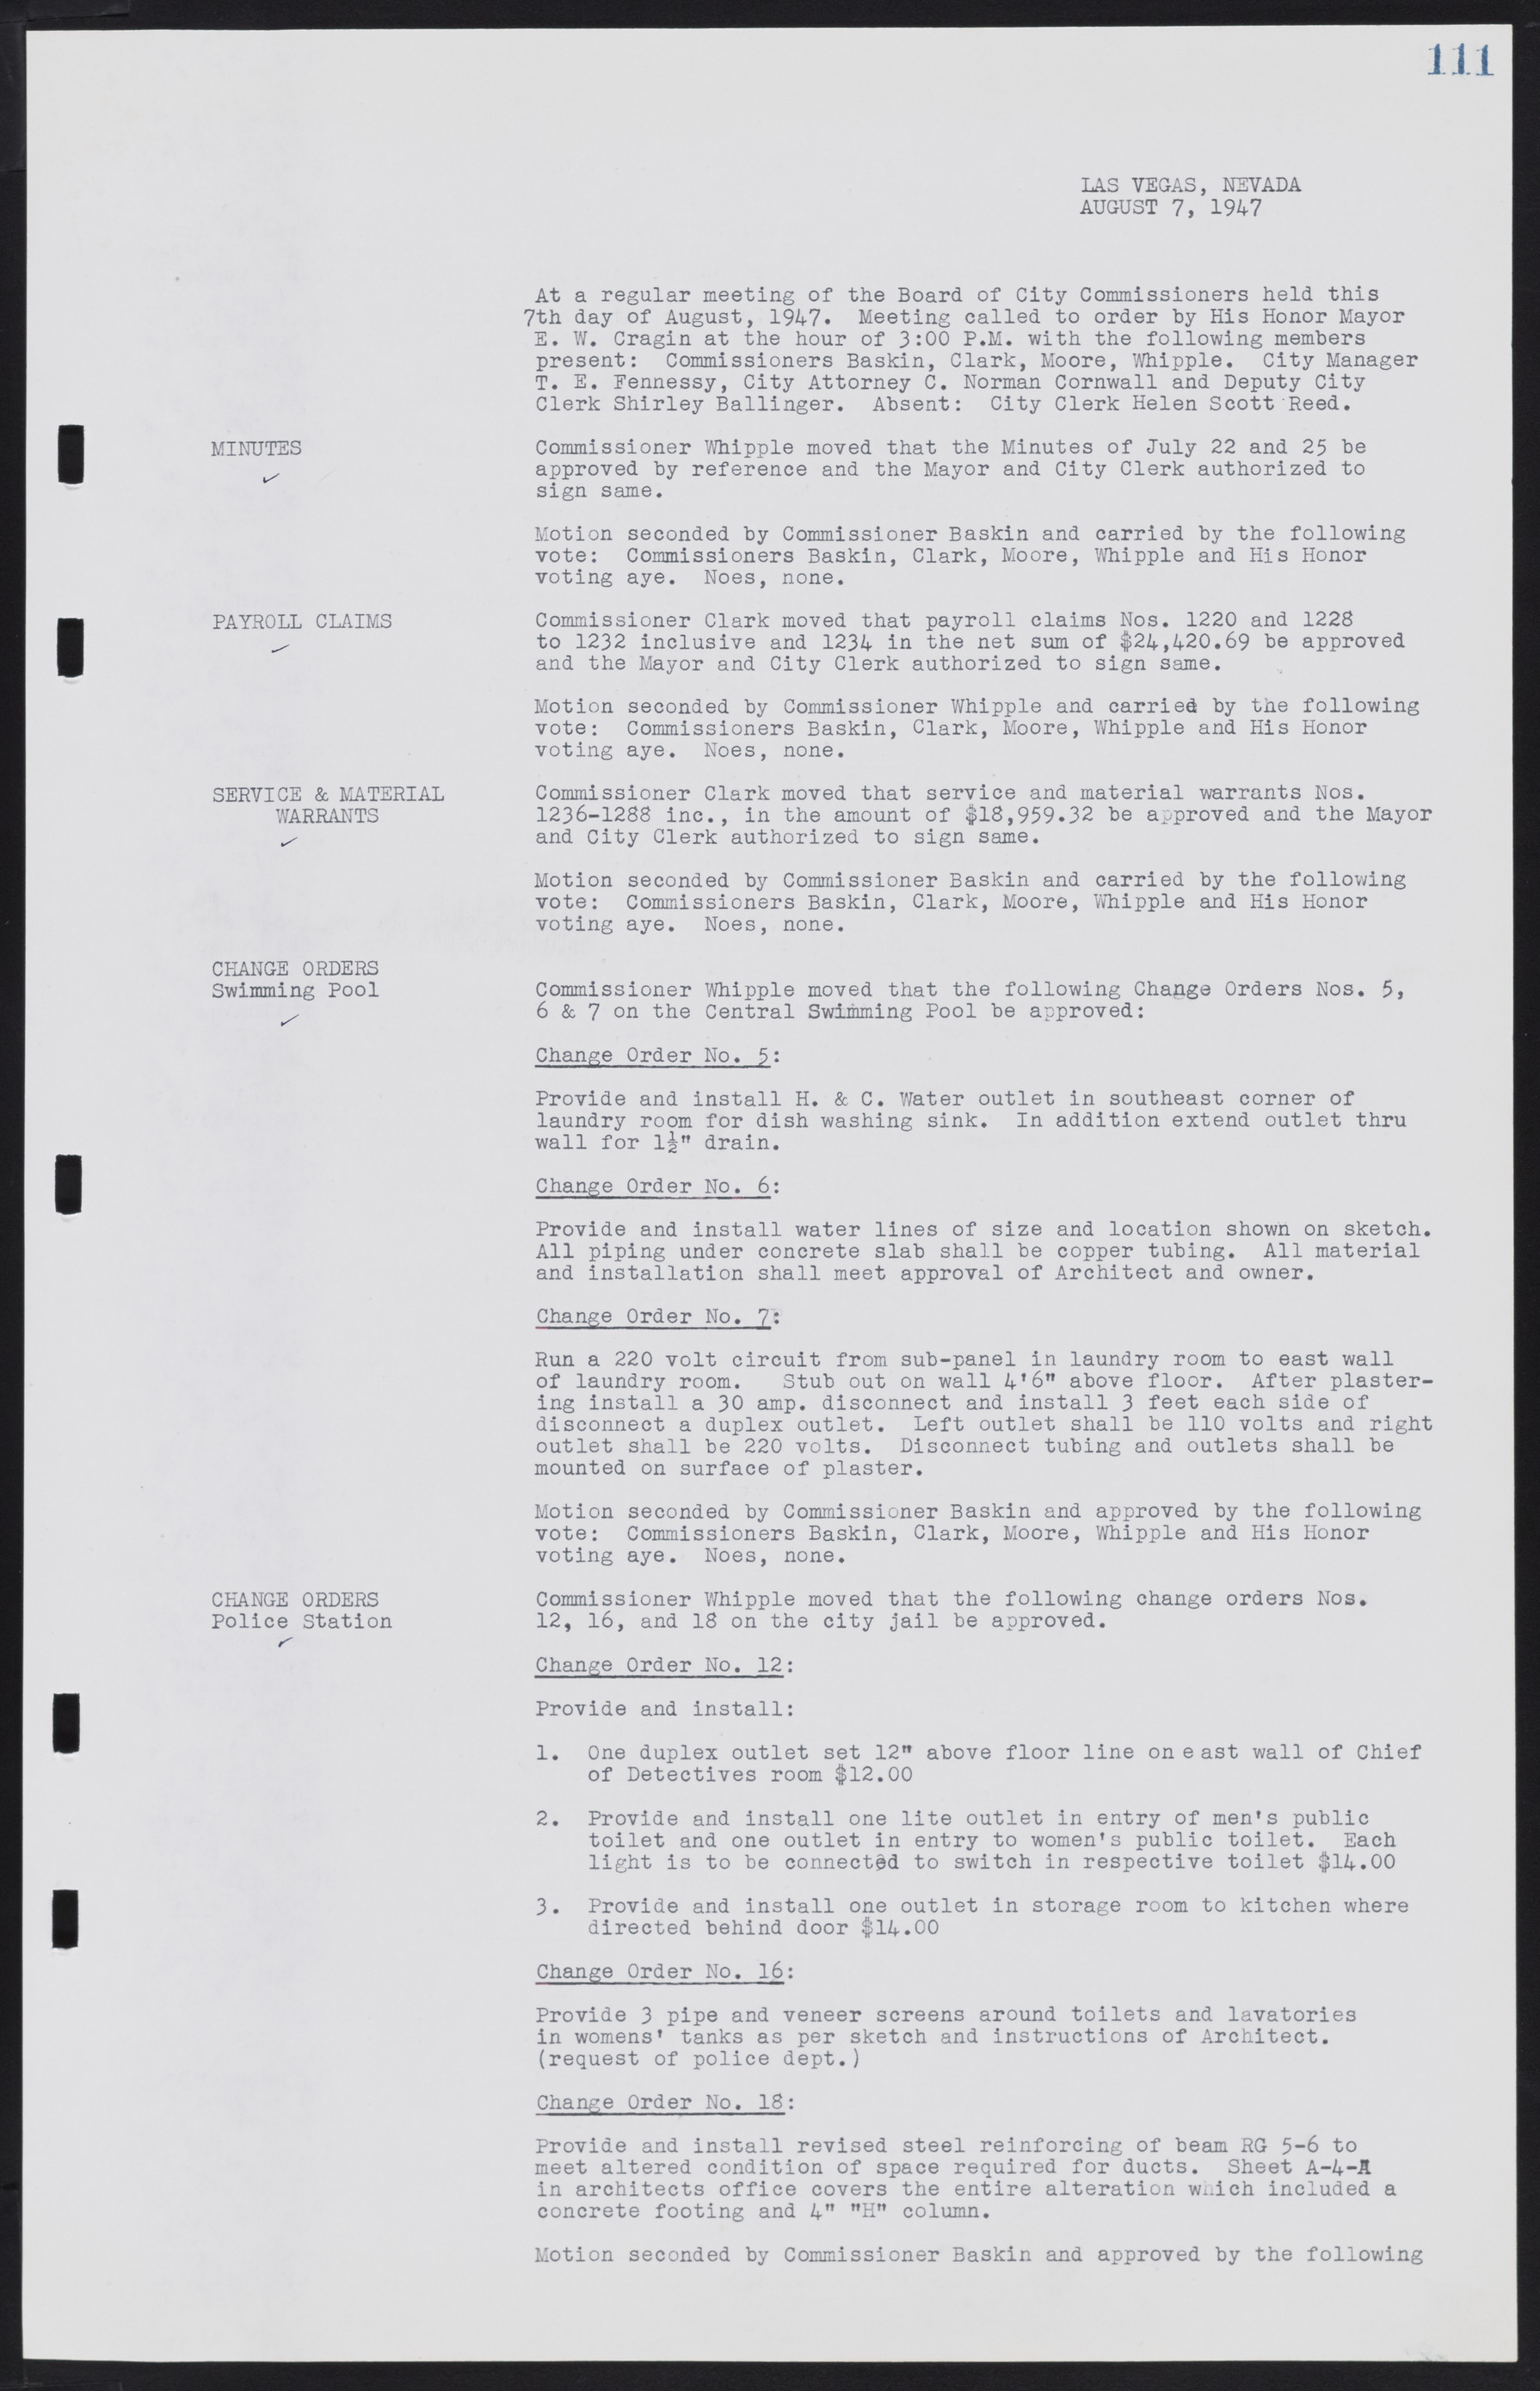 Las Vegas City Commission Minutes, January 7, 1947 to October 26, 1949, lvc000006-129